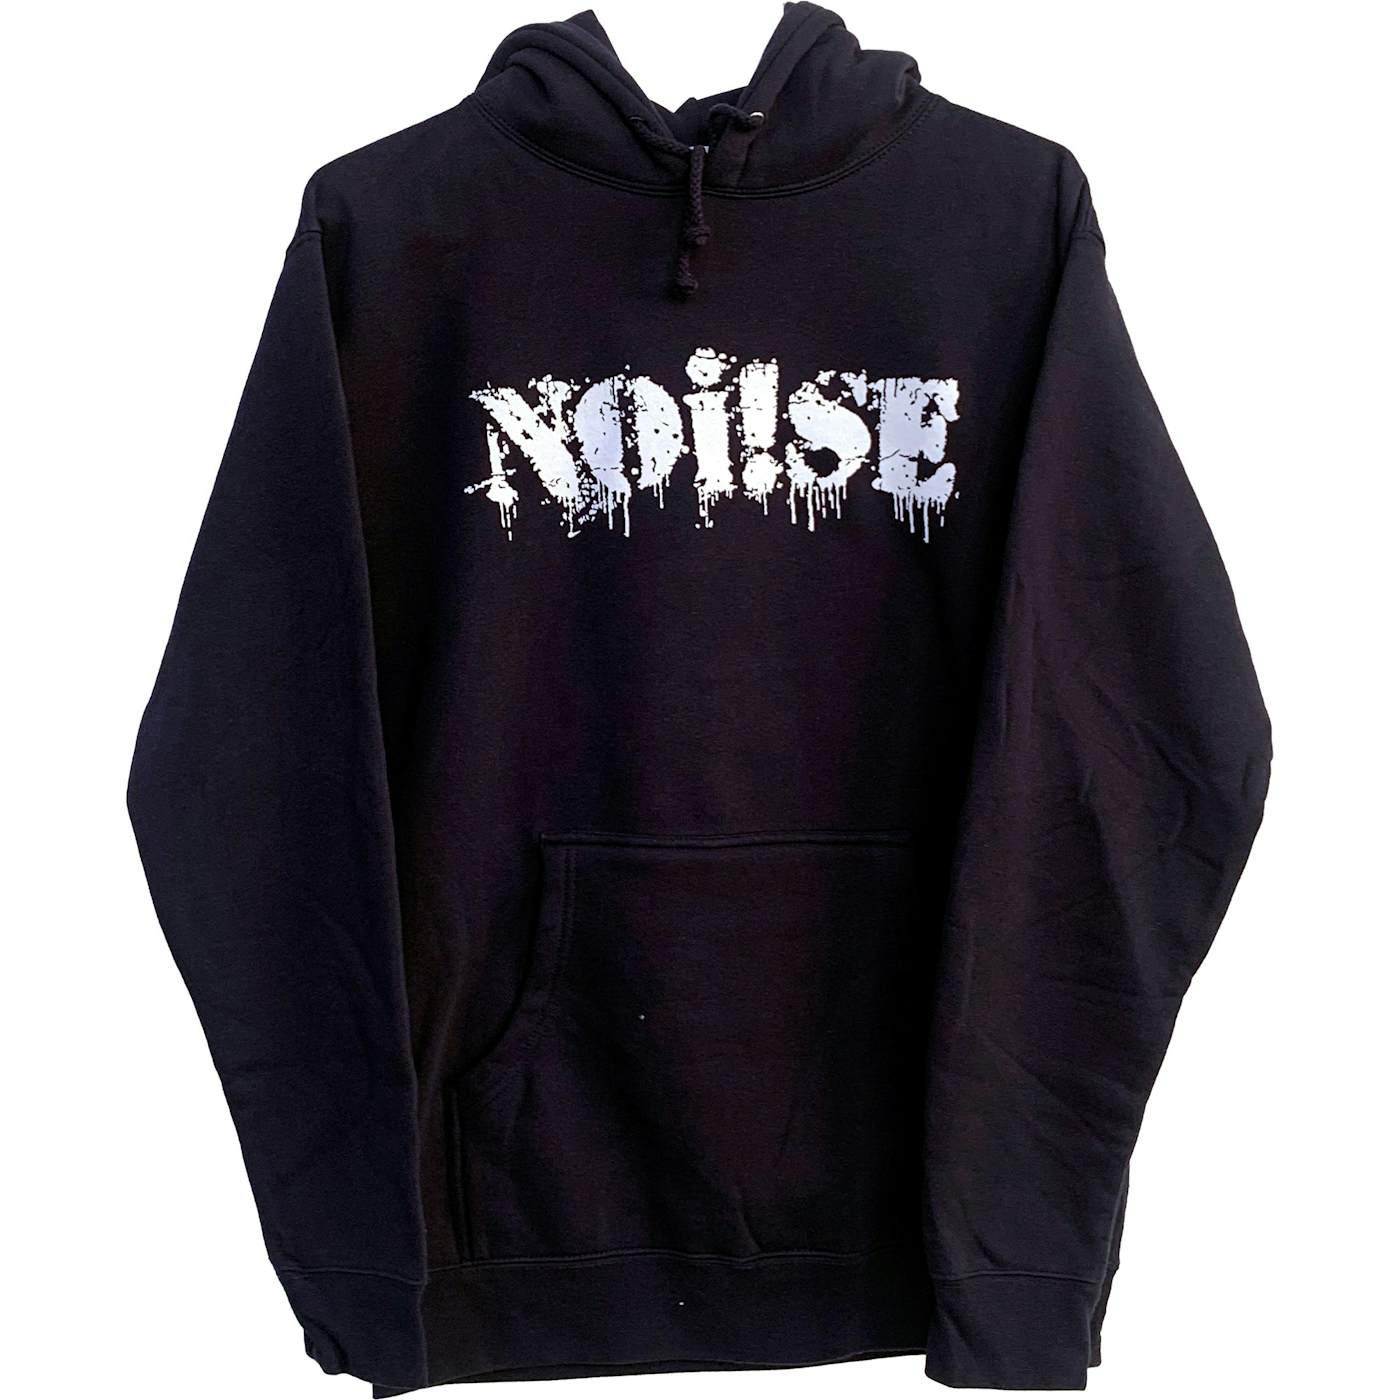 NOi!SE - Logo - White On Navy Blue - Hooded Sweatshirt